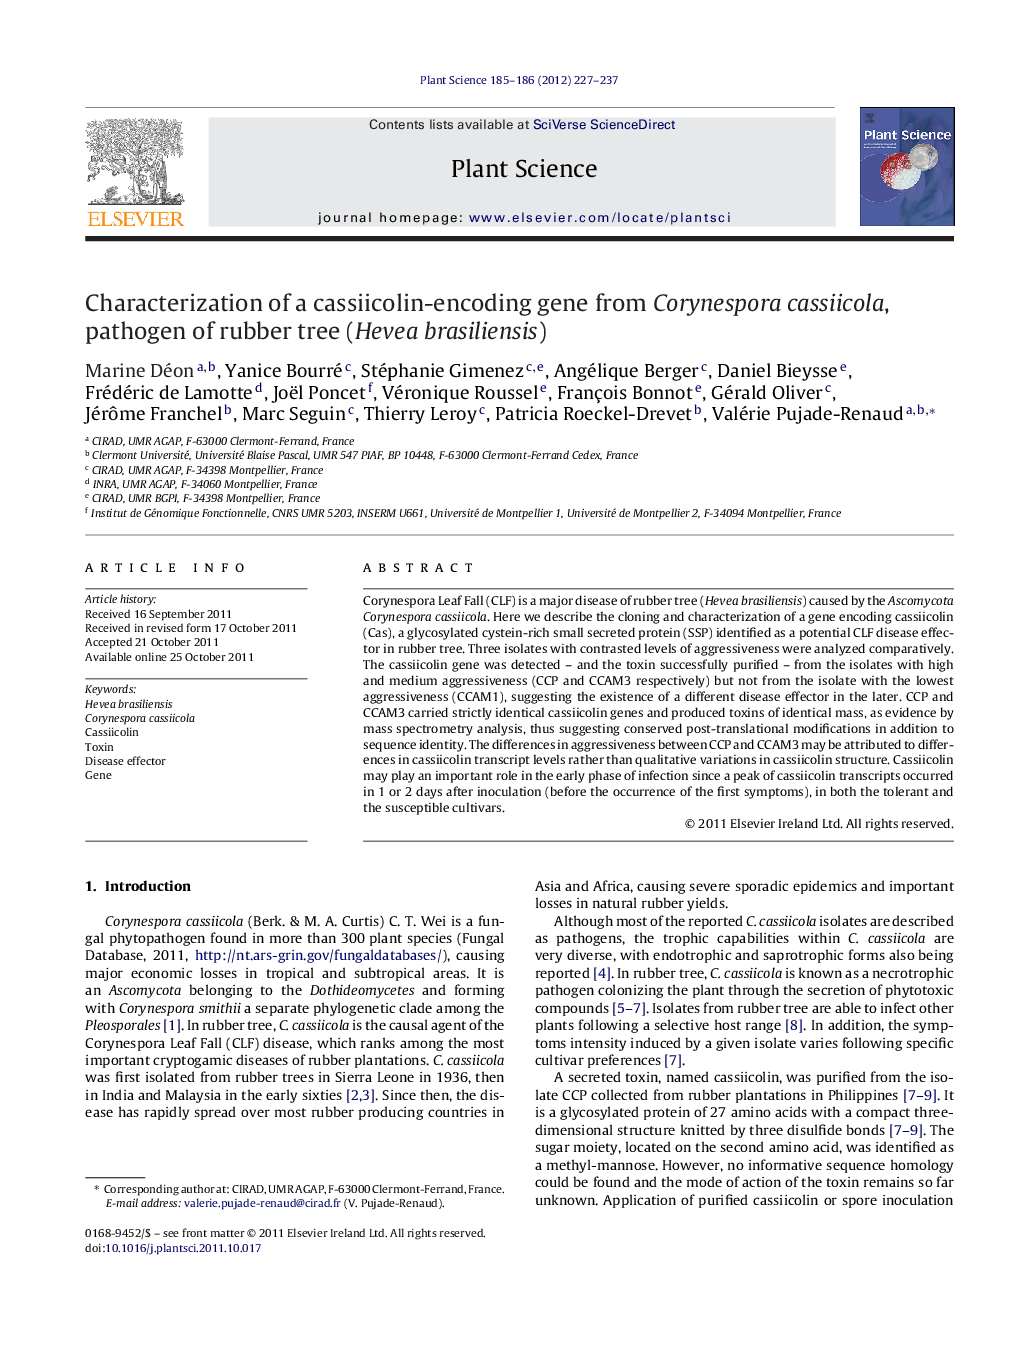 Characterization of a cassiicolin-encoding gene from Corynespora cassiicola, pathogen of rubber tree (Hevea brasiliensis)